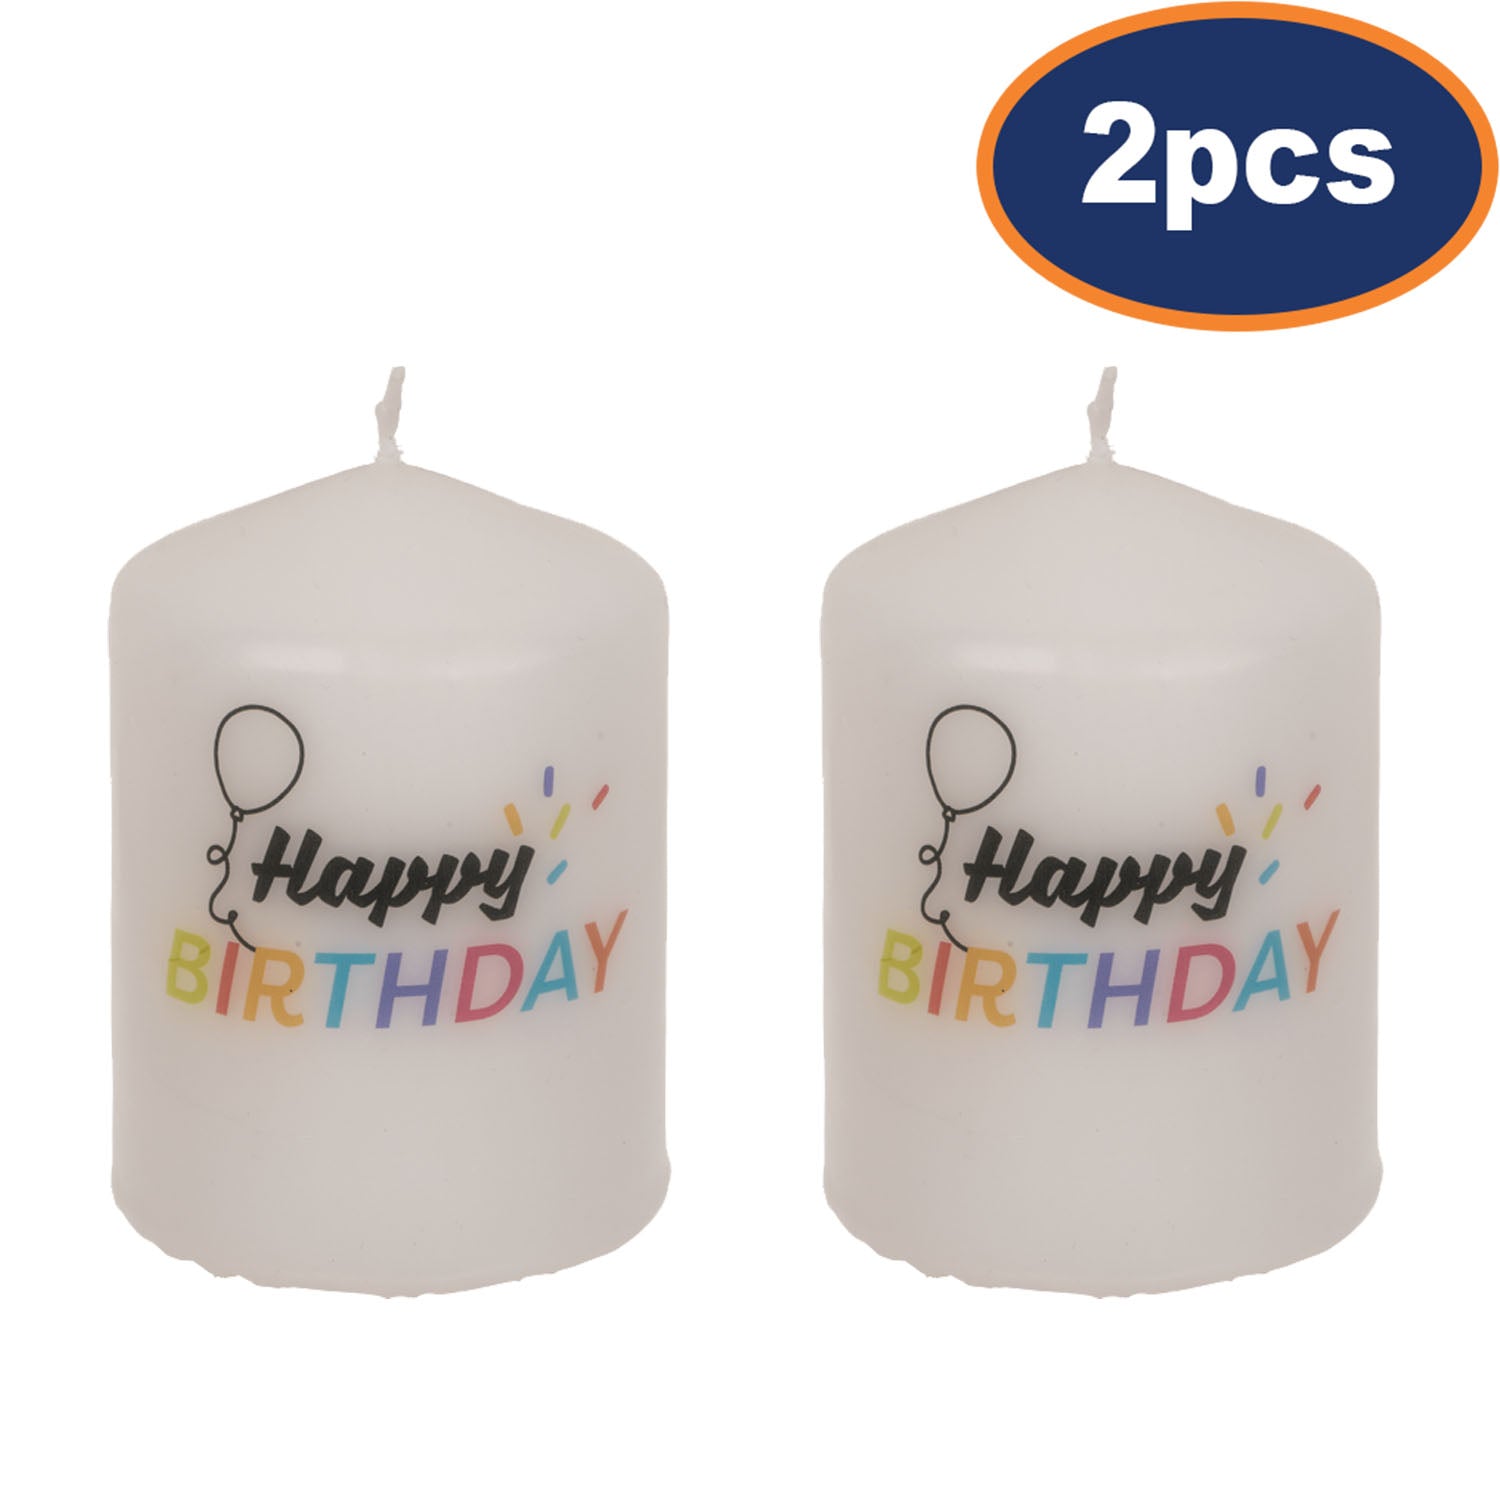 2Pcs Happy Birthday Unscented Pillar Candle